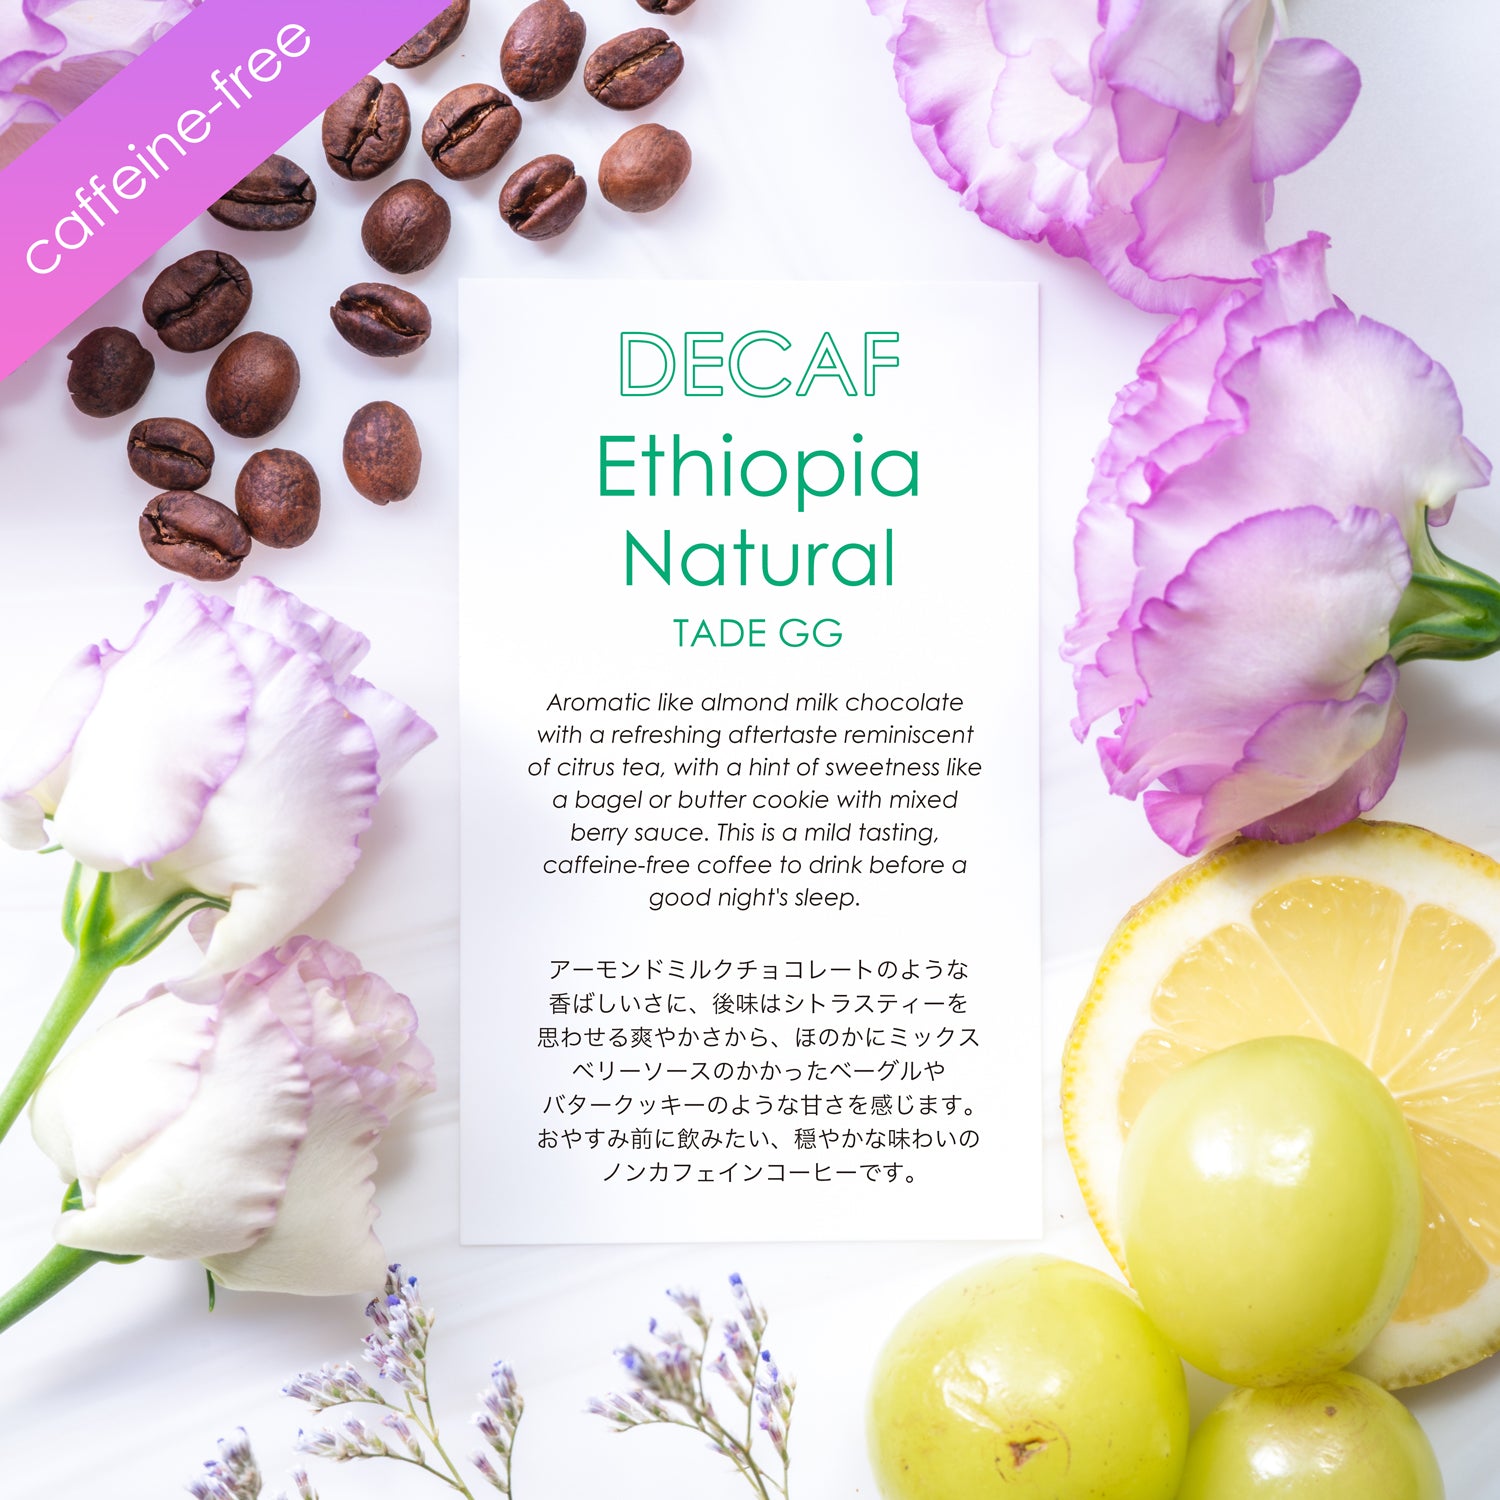 Decaf Ethiopia TADE GG Natural【フルーティーノンカフェイン】